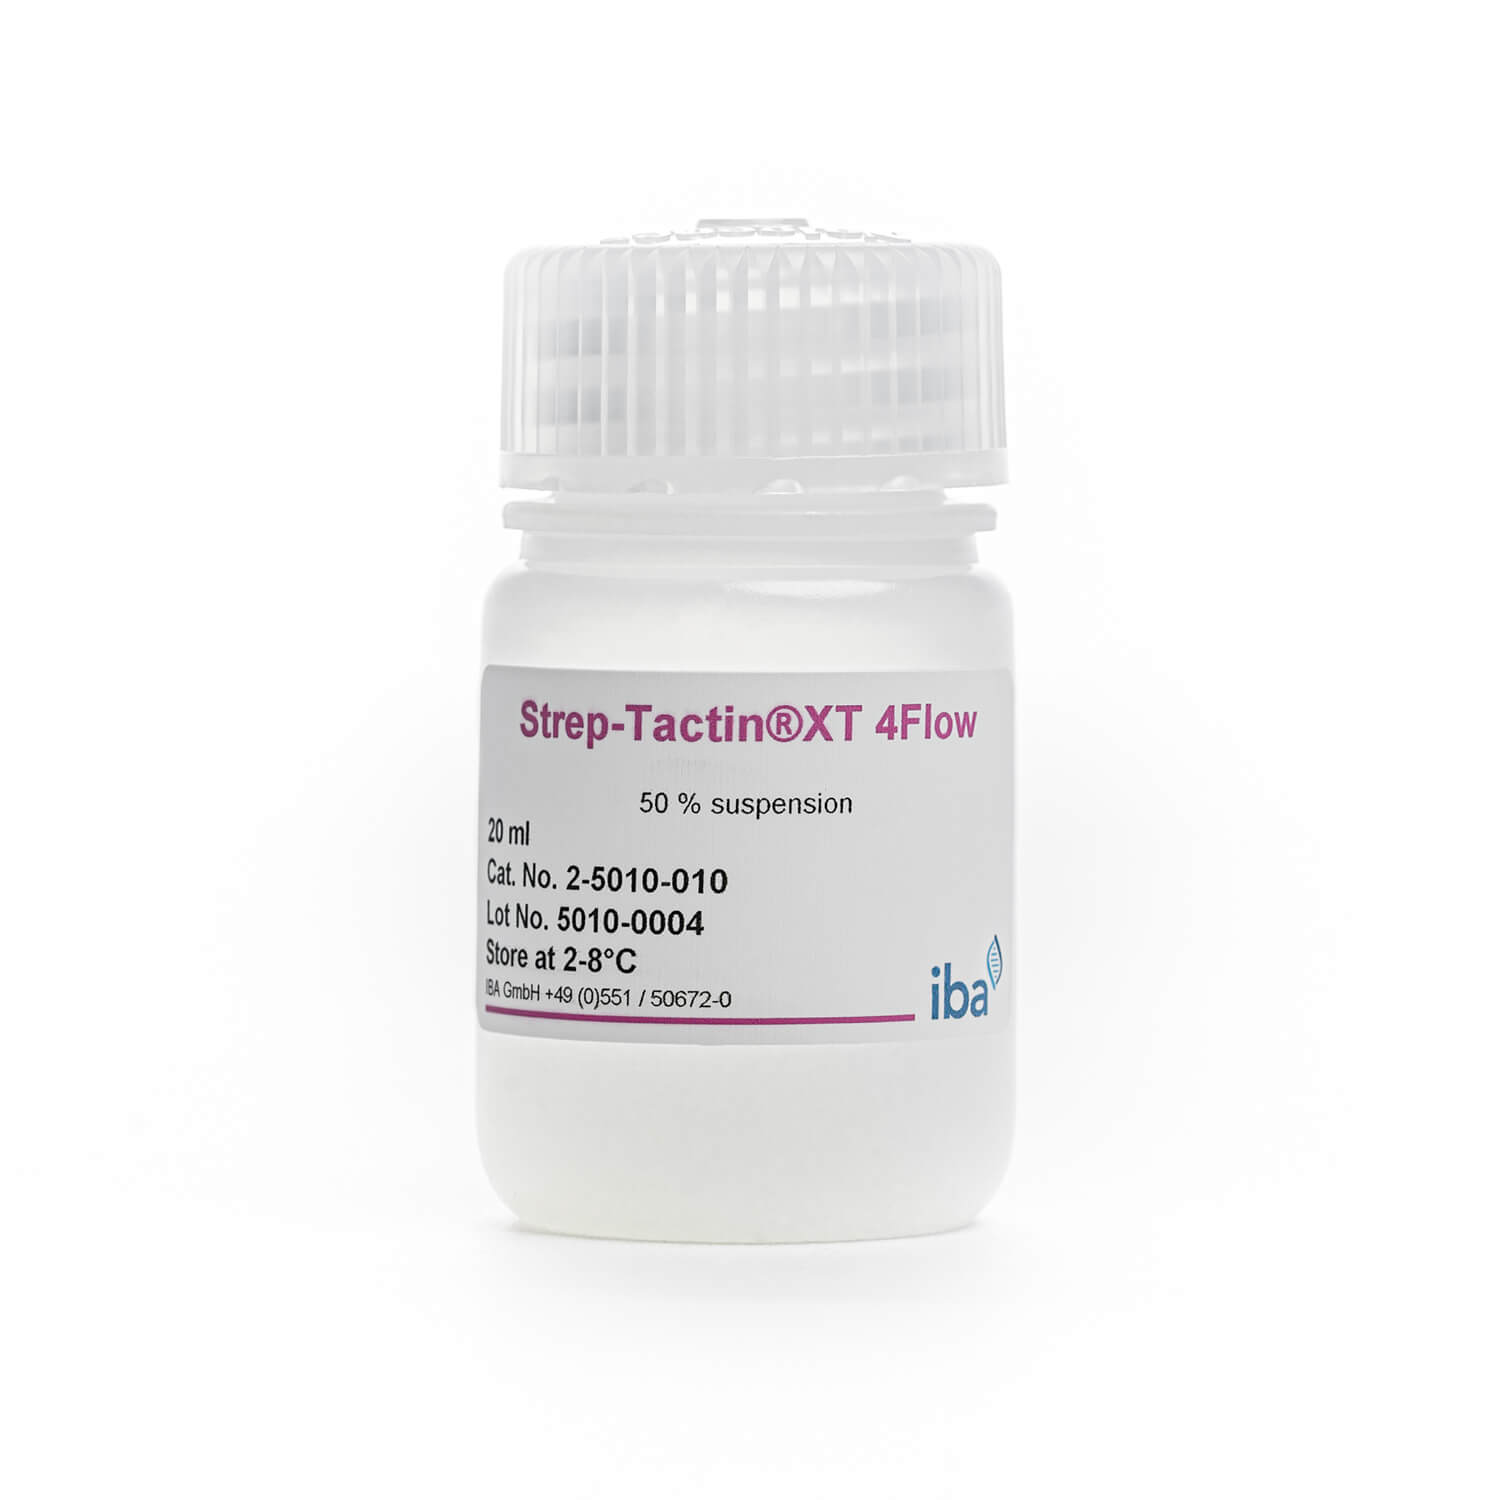 Strep-Tactin®XT 4Flow® resin